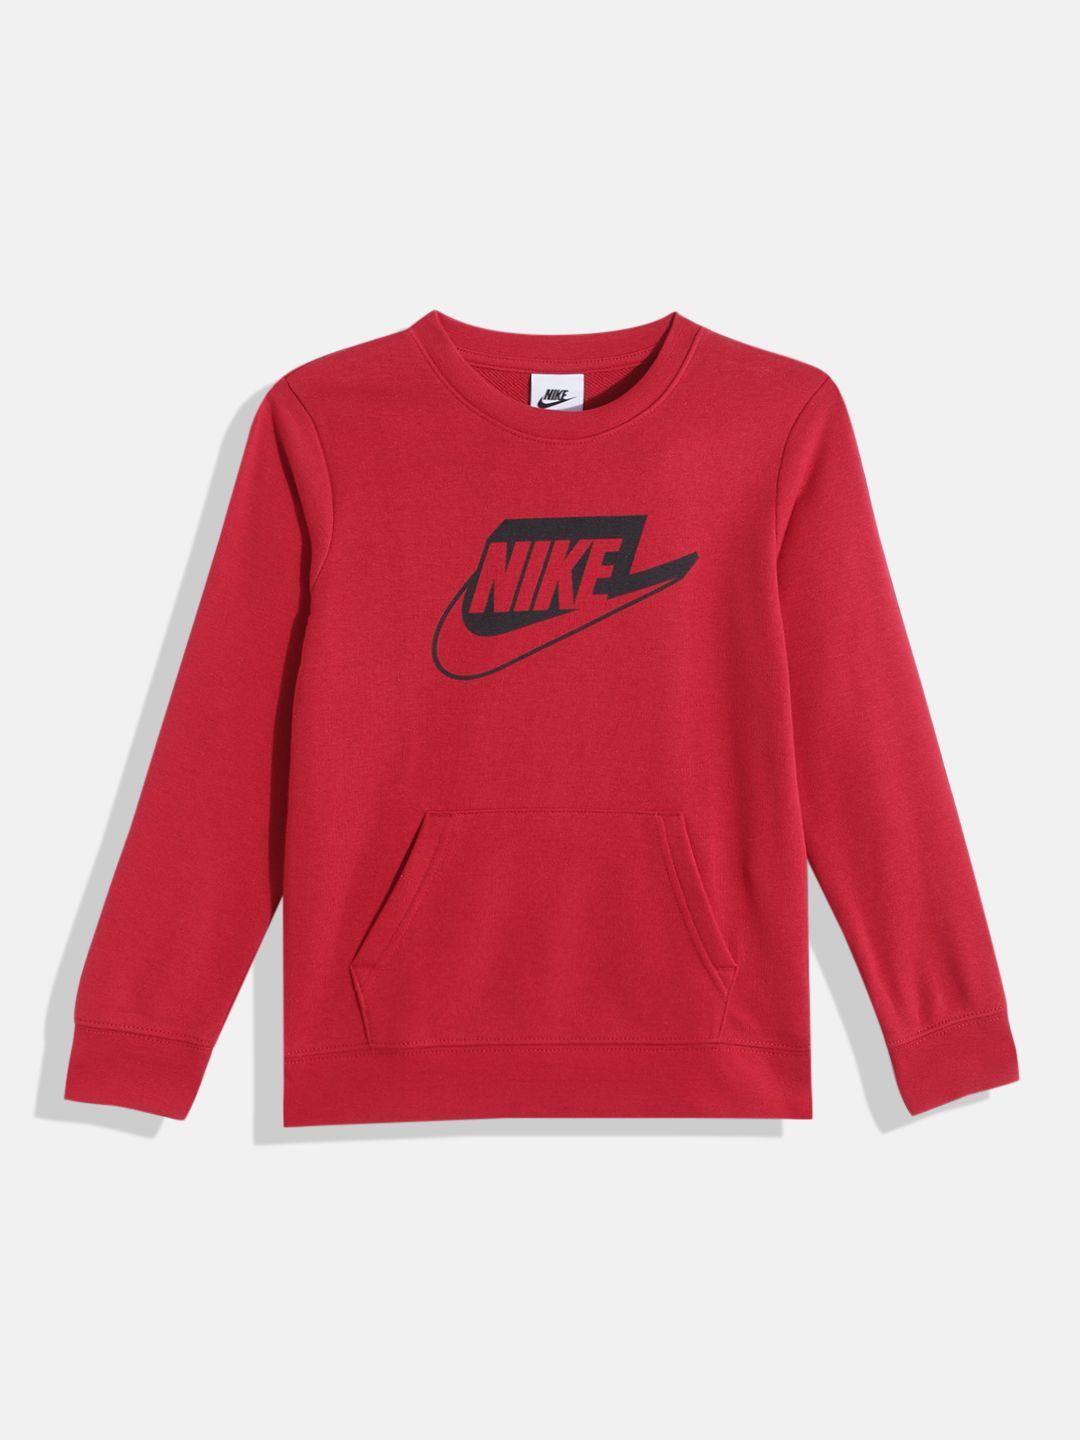 nike boys red printed sweatshirt